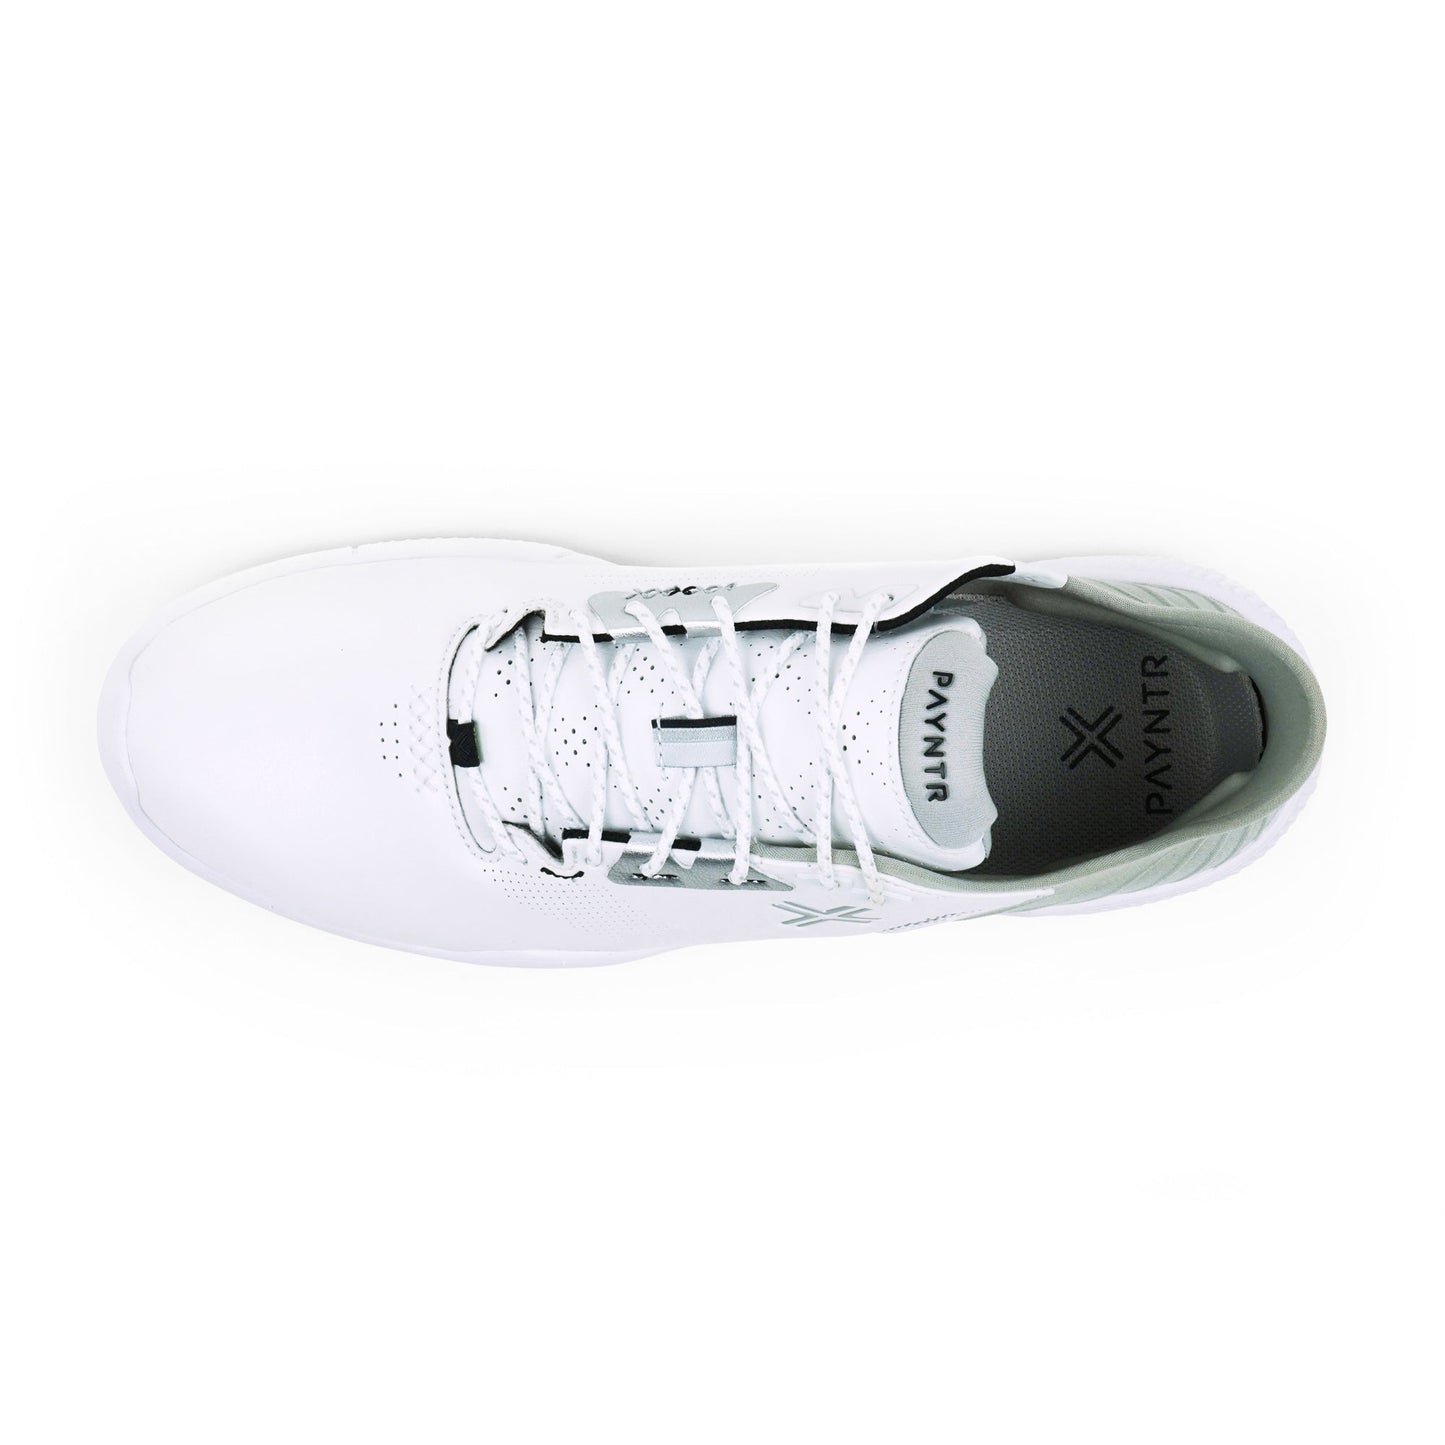 PAYNTR X-005 F Spikeless Golf Shoe (White/Silver) - Top